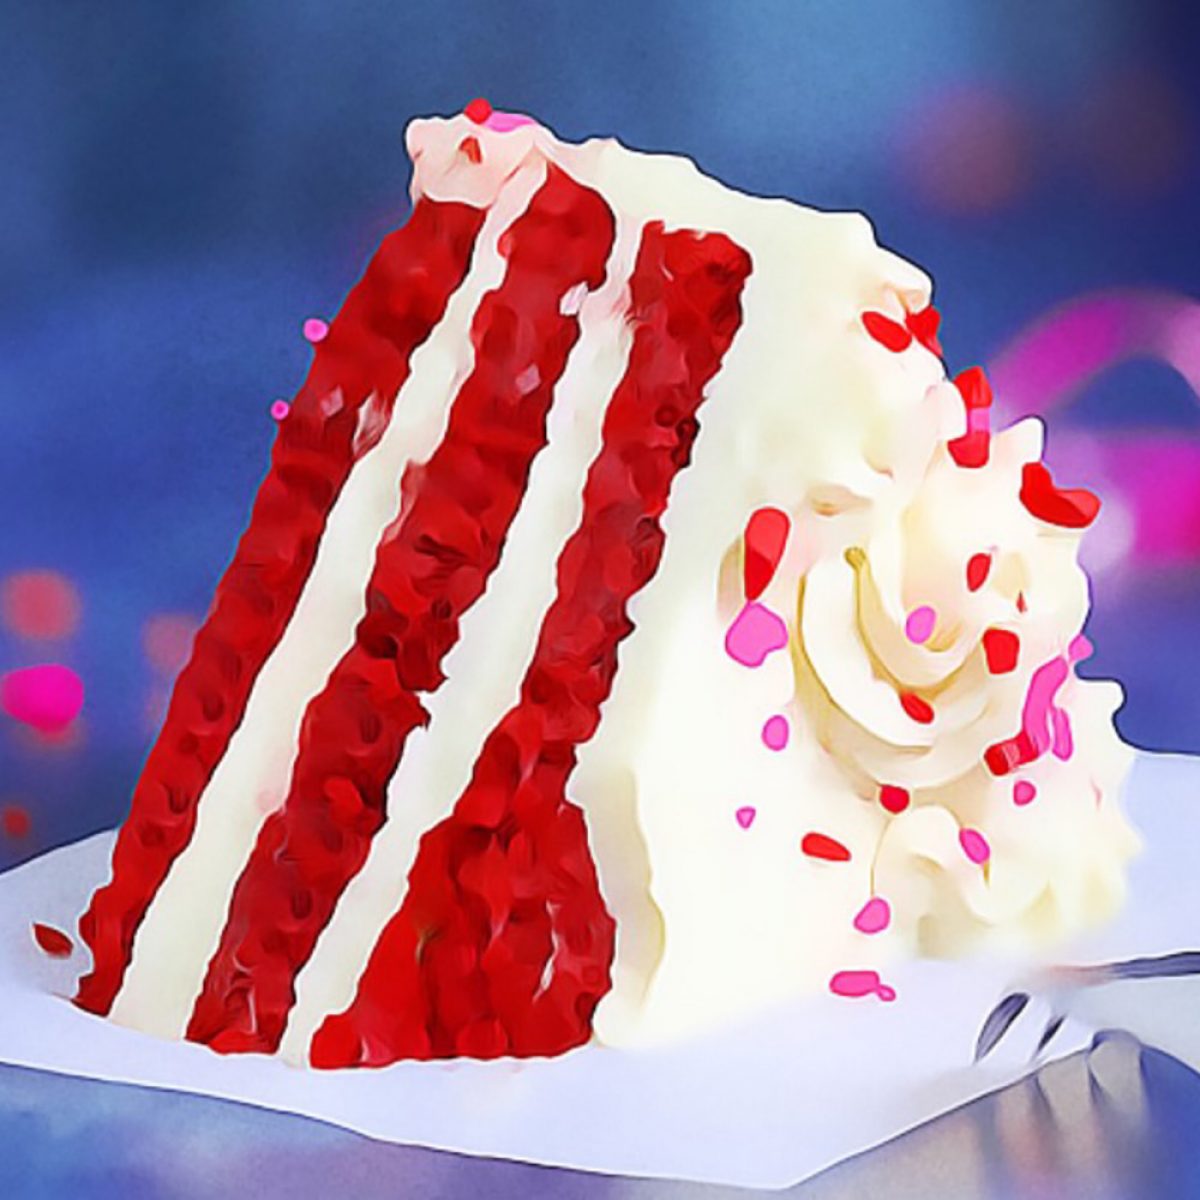 Android 11 is Red Velvet Cake